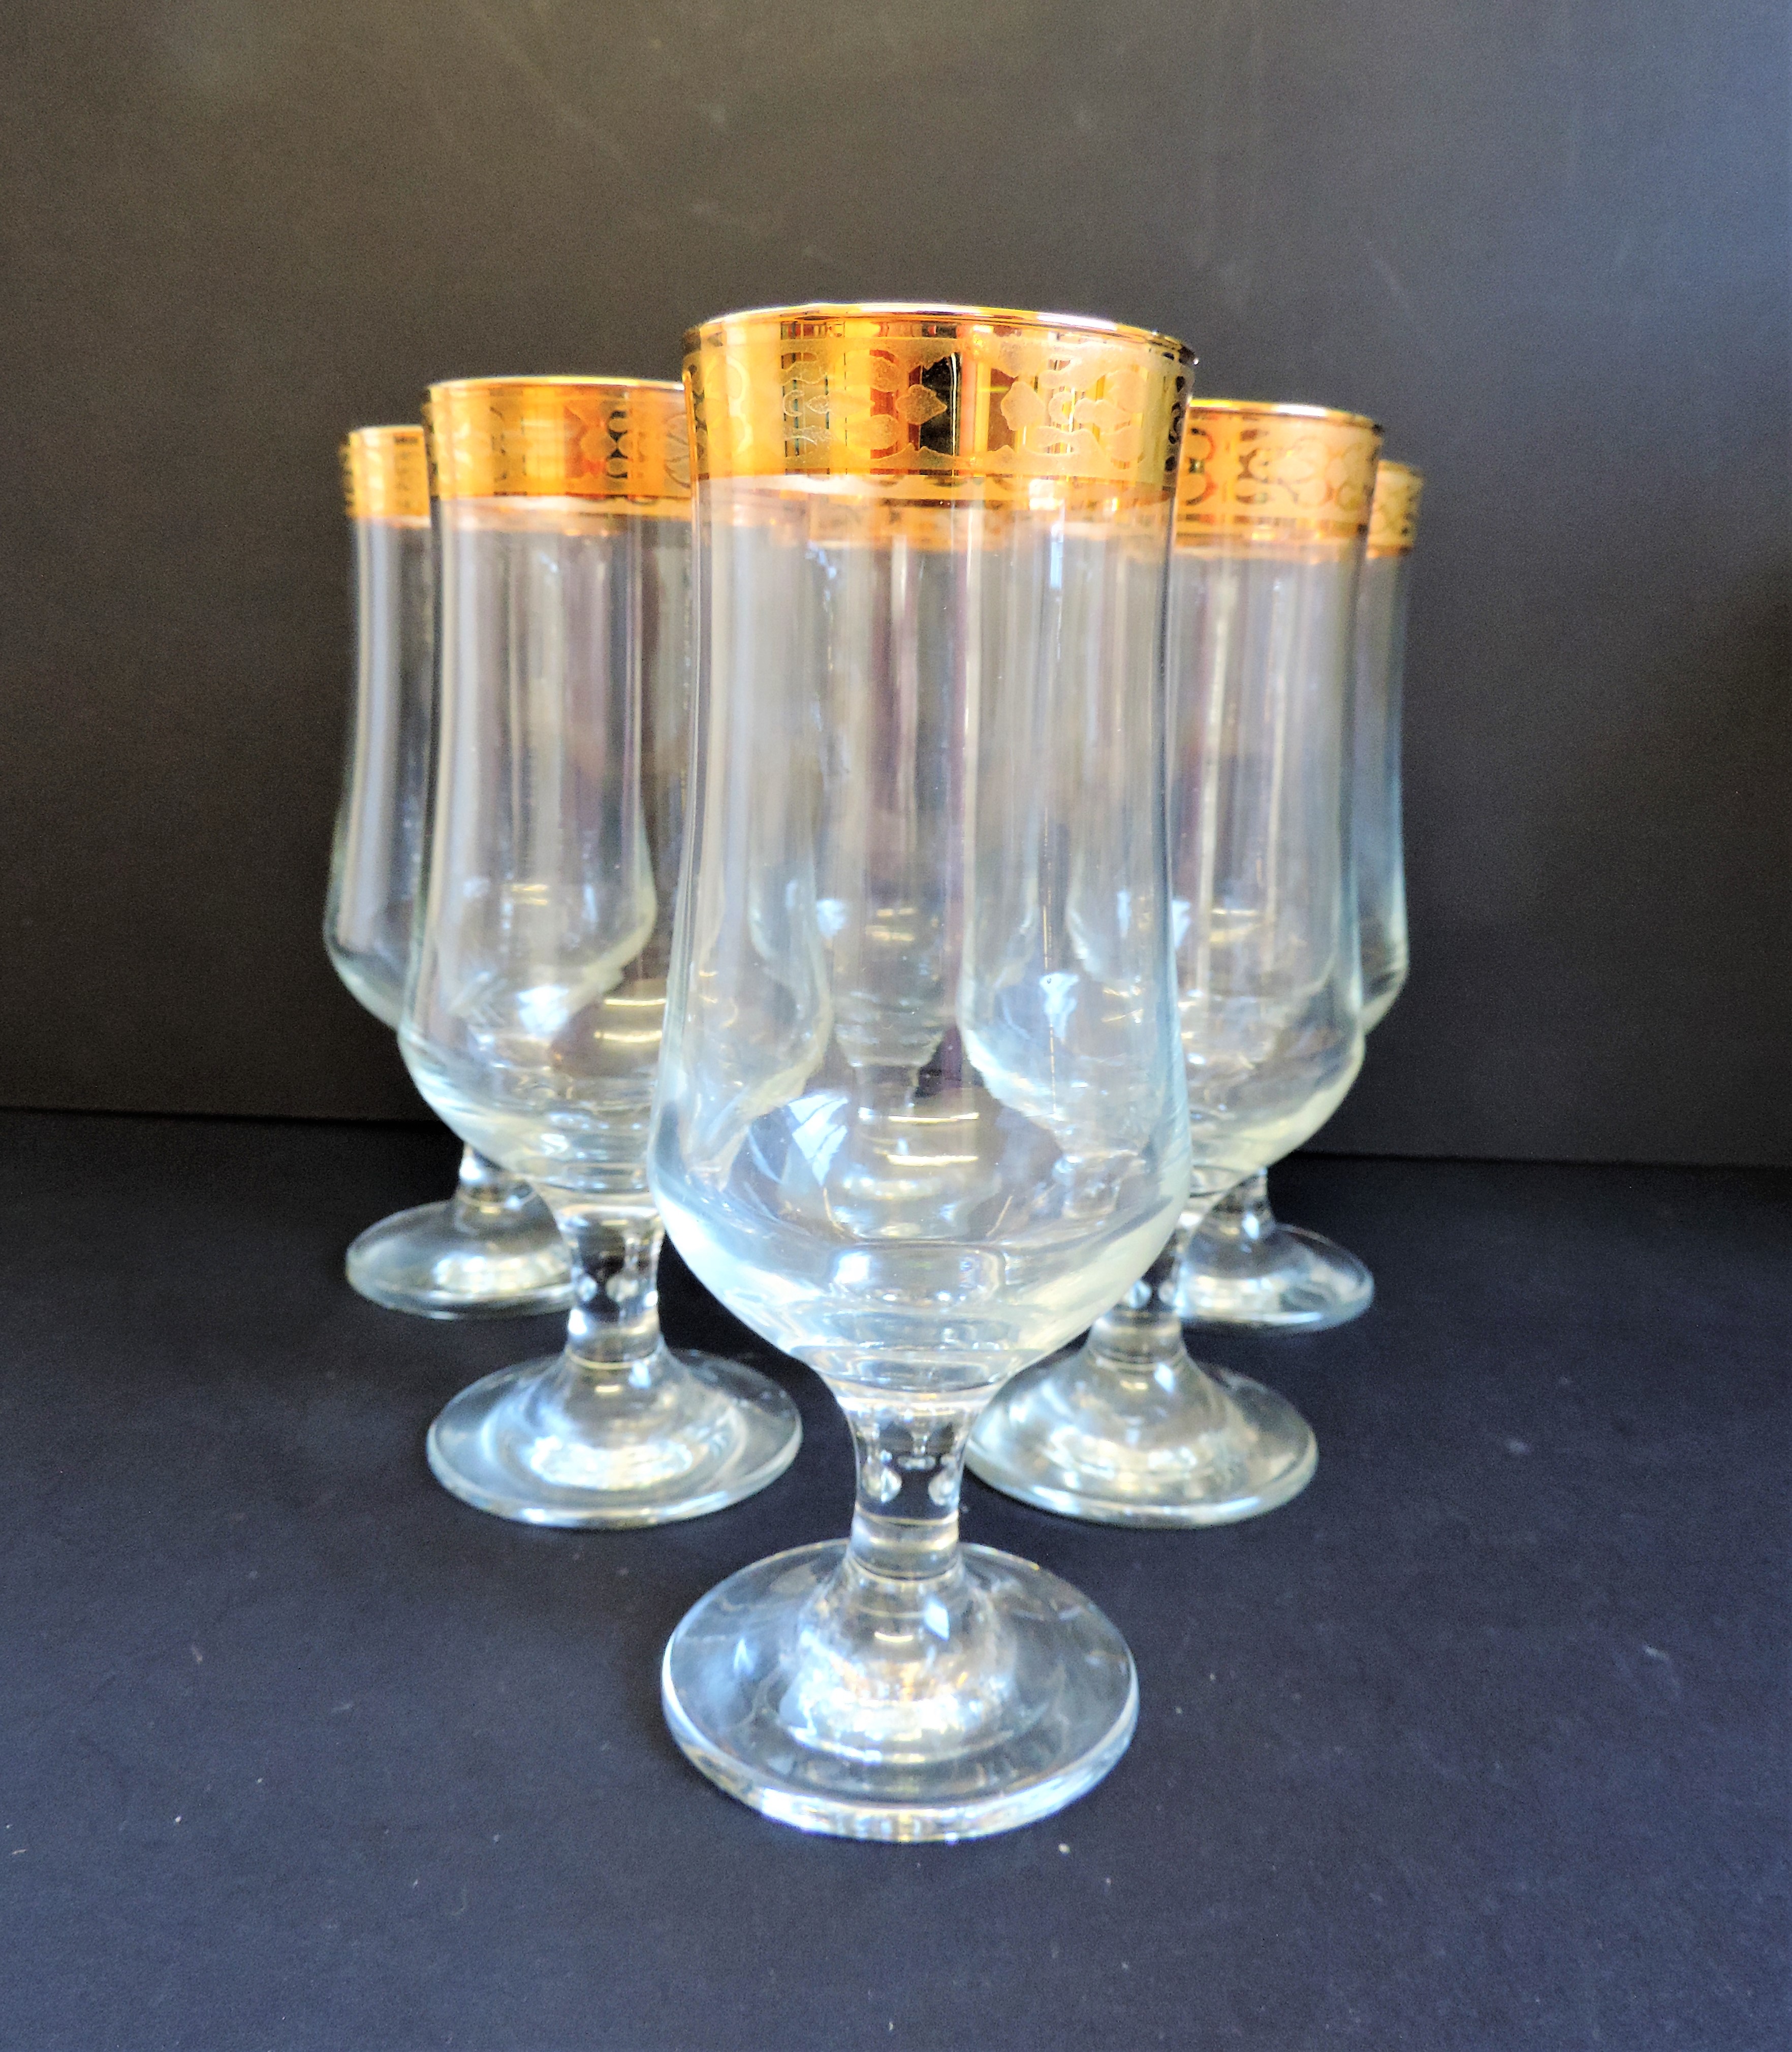 Vintage Venetian gold rimmed tall glasses for cocktails/sprintzers etc - Image 4 of 8